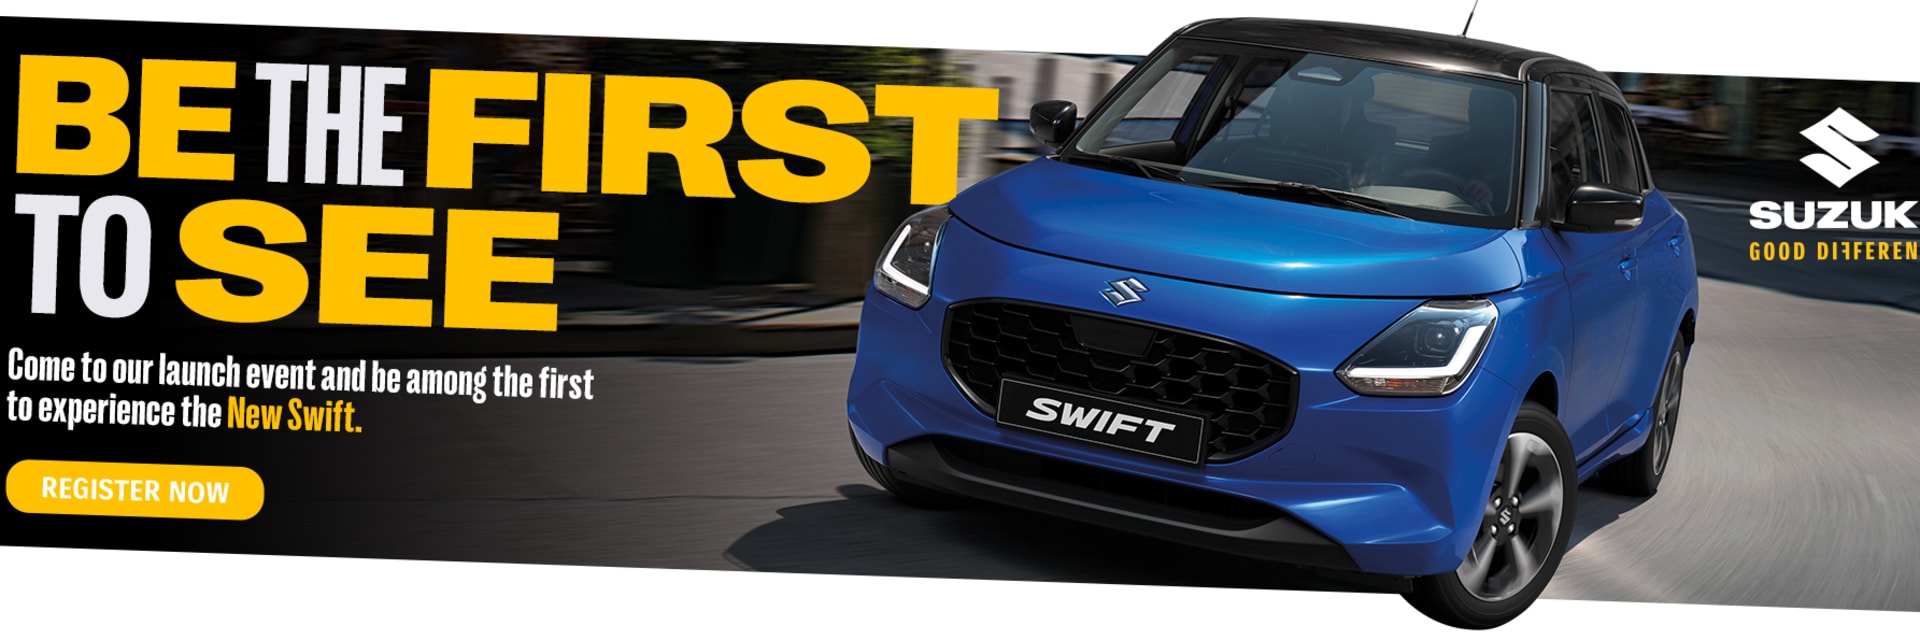 The new Suzuki Swift!